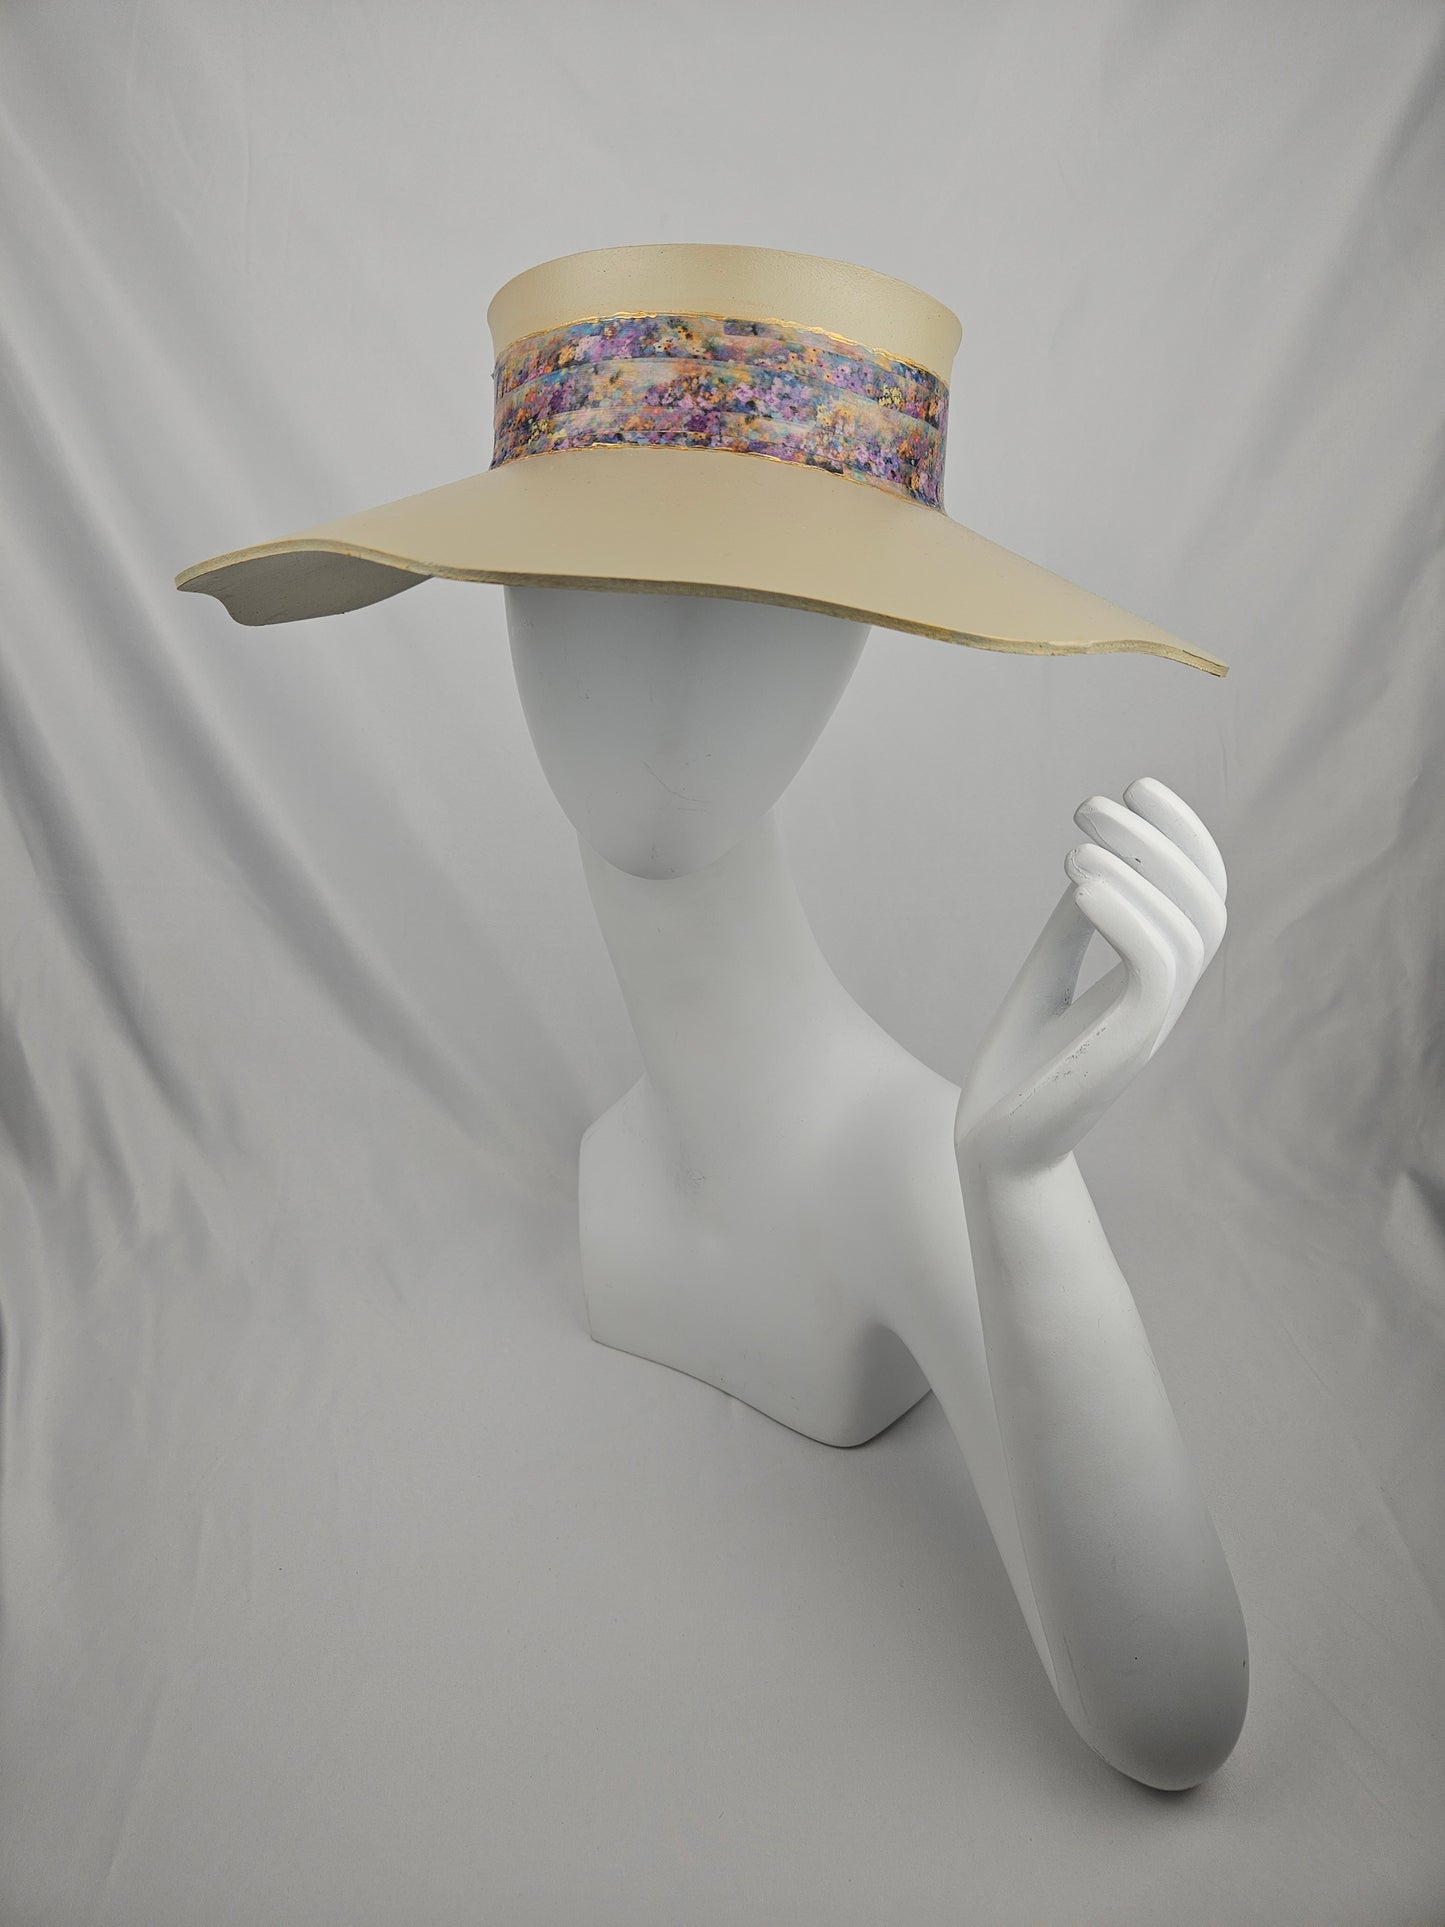 Beautiful Beige Lotus Foam Sun Visor Hat with Multi-Color Monet Style Band: 1950s, Walks, Brunch, Asian, Golf, Easter, Church, No Headache, Derby